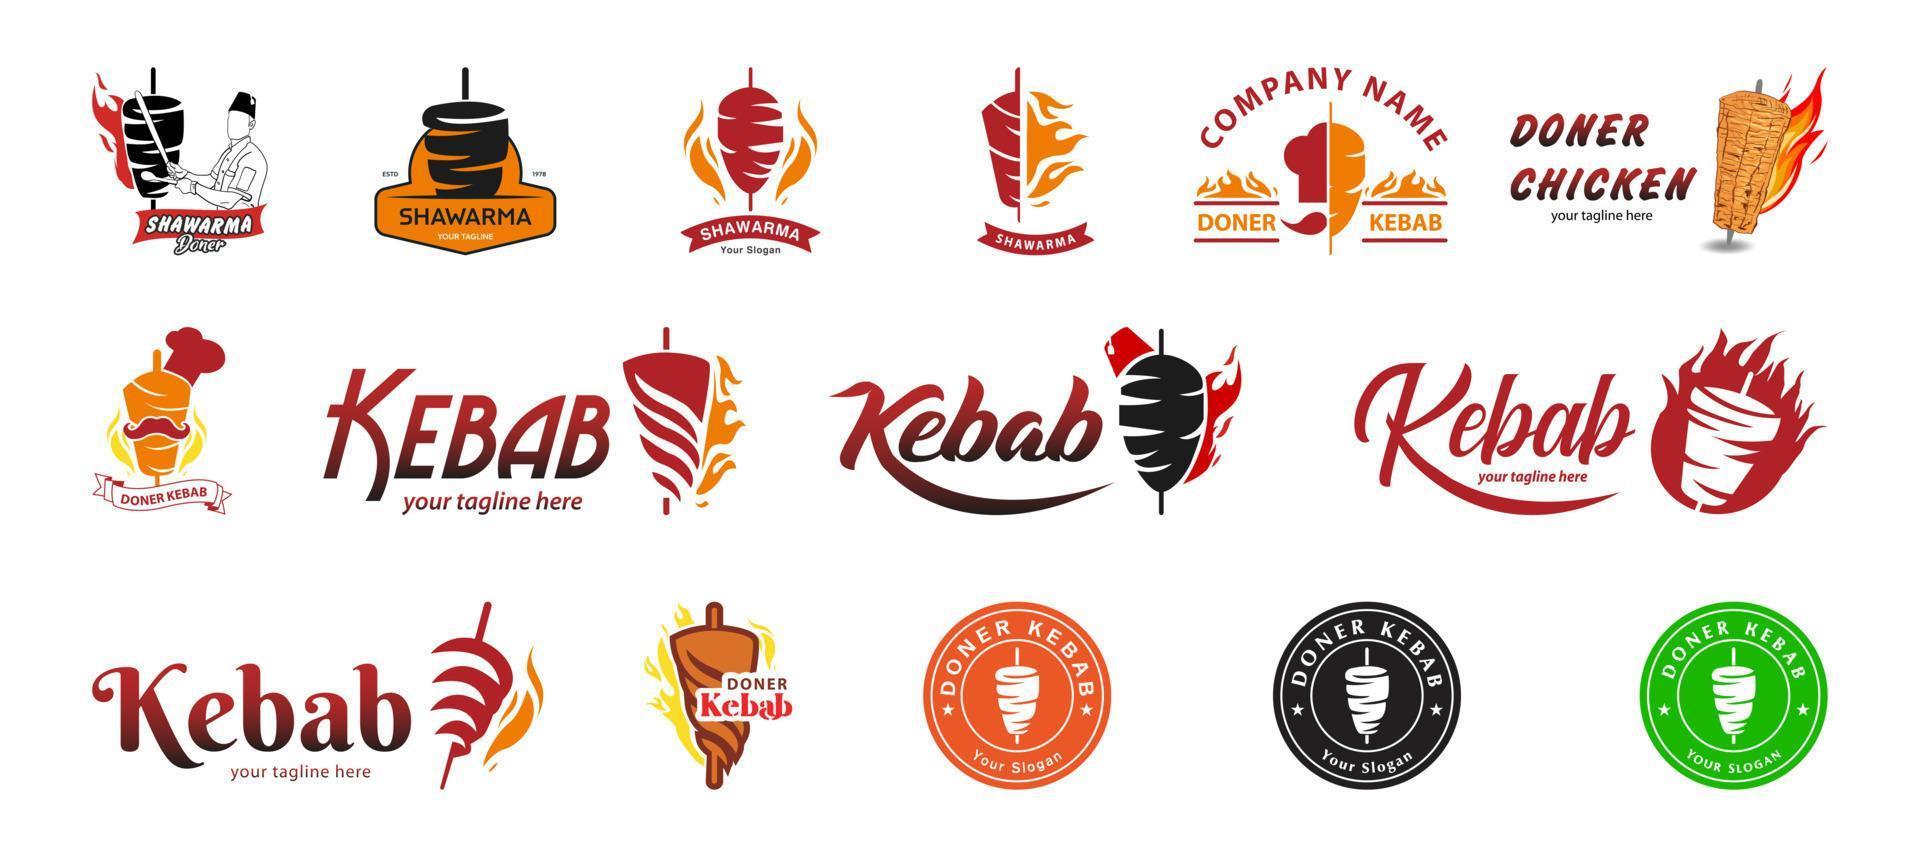 Shawarma logo for restaurants and markets. vector